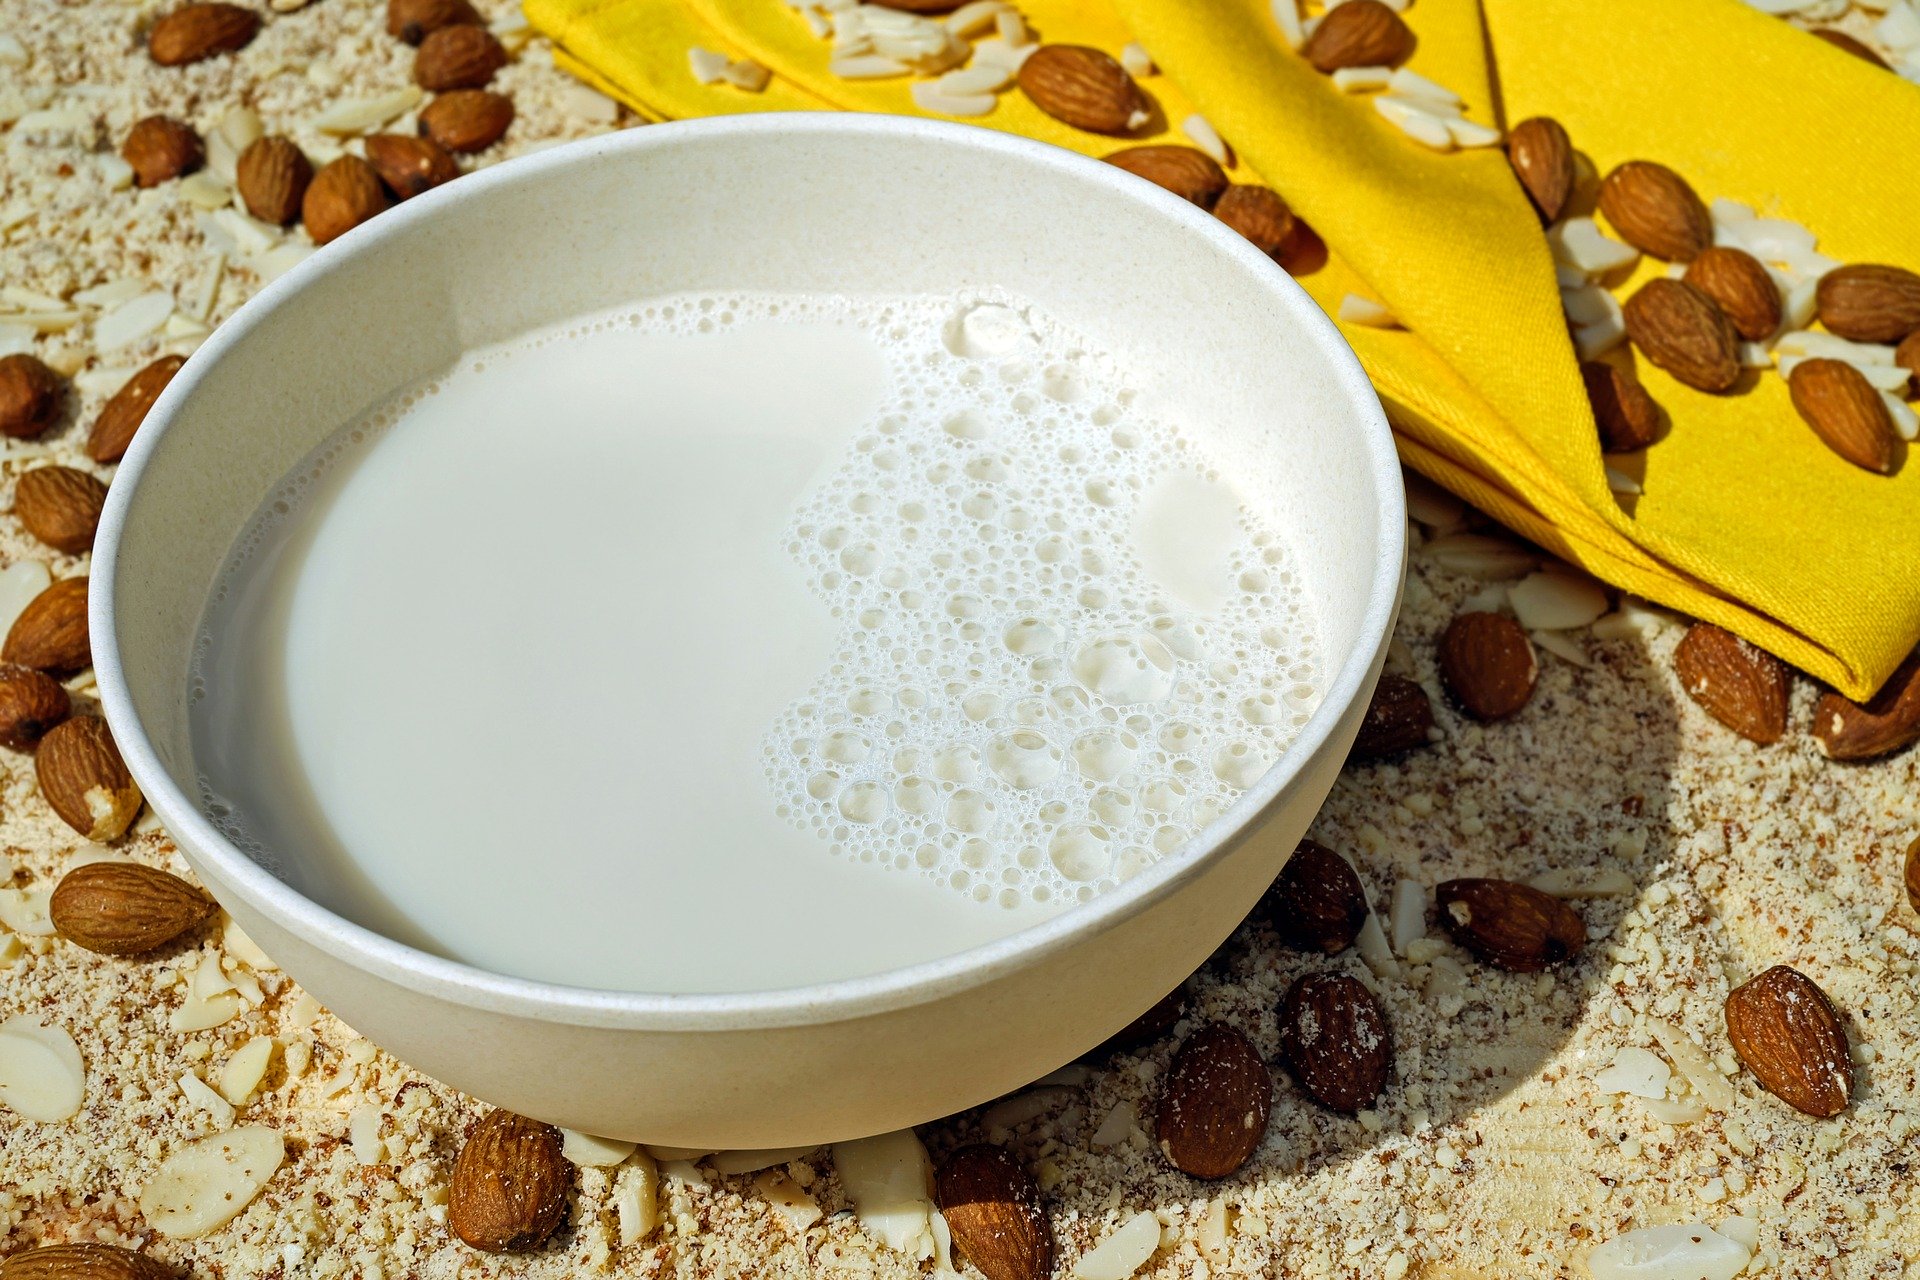 Latte vegetale fai da te: 8 esempi di latte estratto da frutta secca e altri vegetali